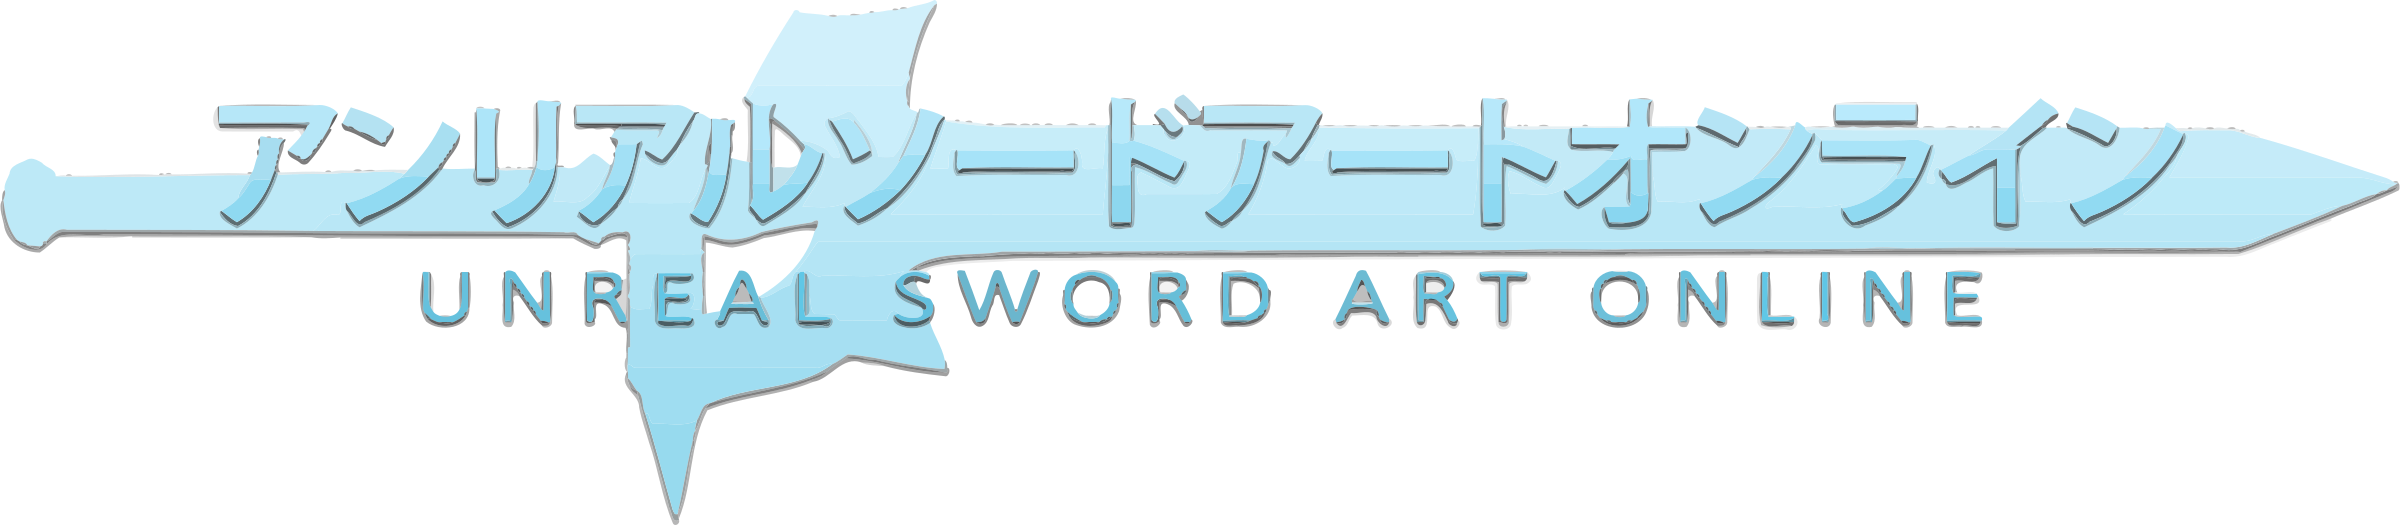 Sword Art Online Logo Png Transparent - Sword Art Online Clipart (2400x525), Png Download